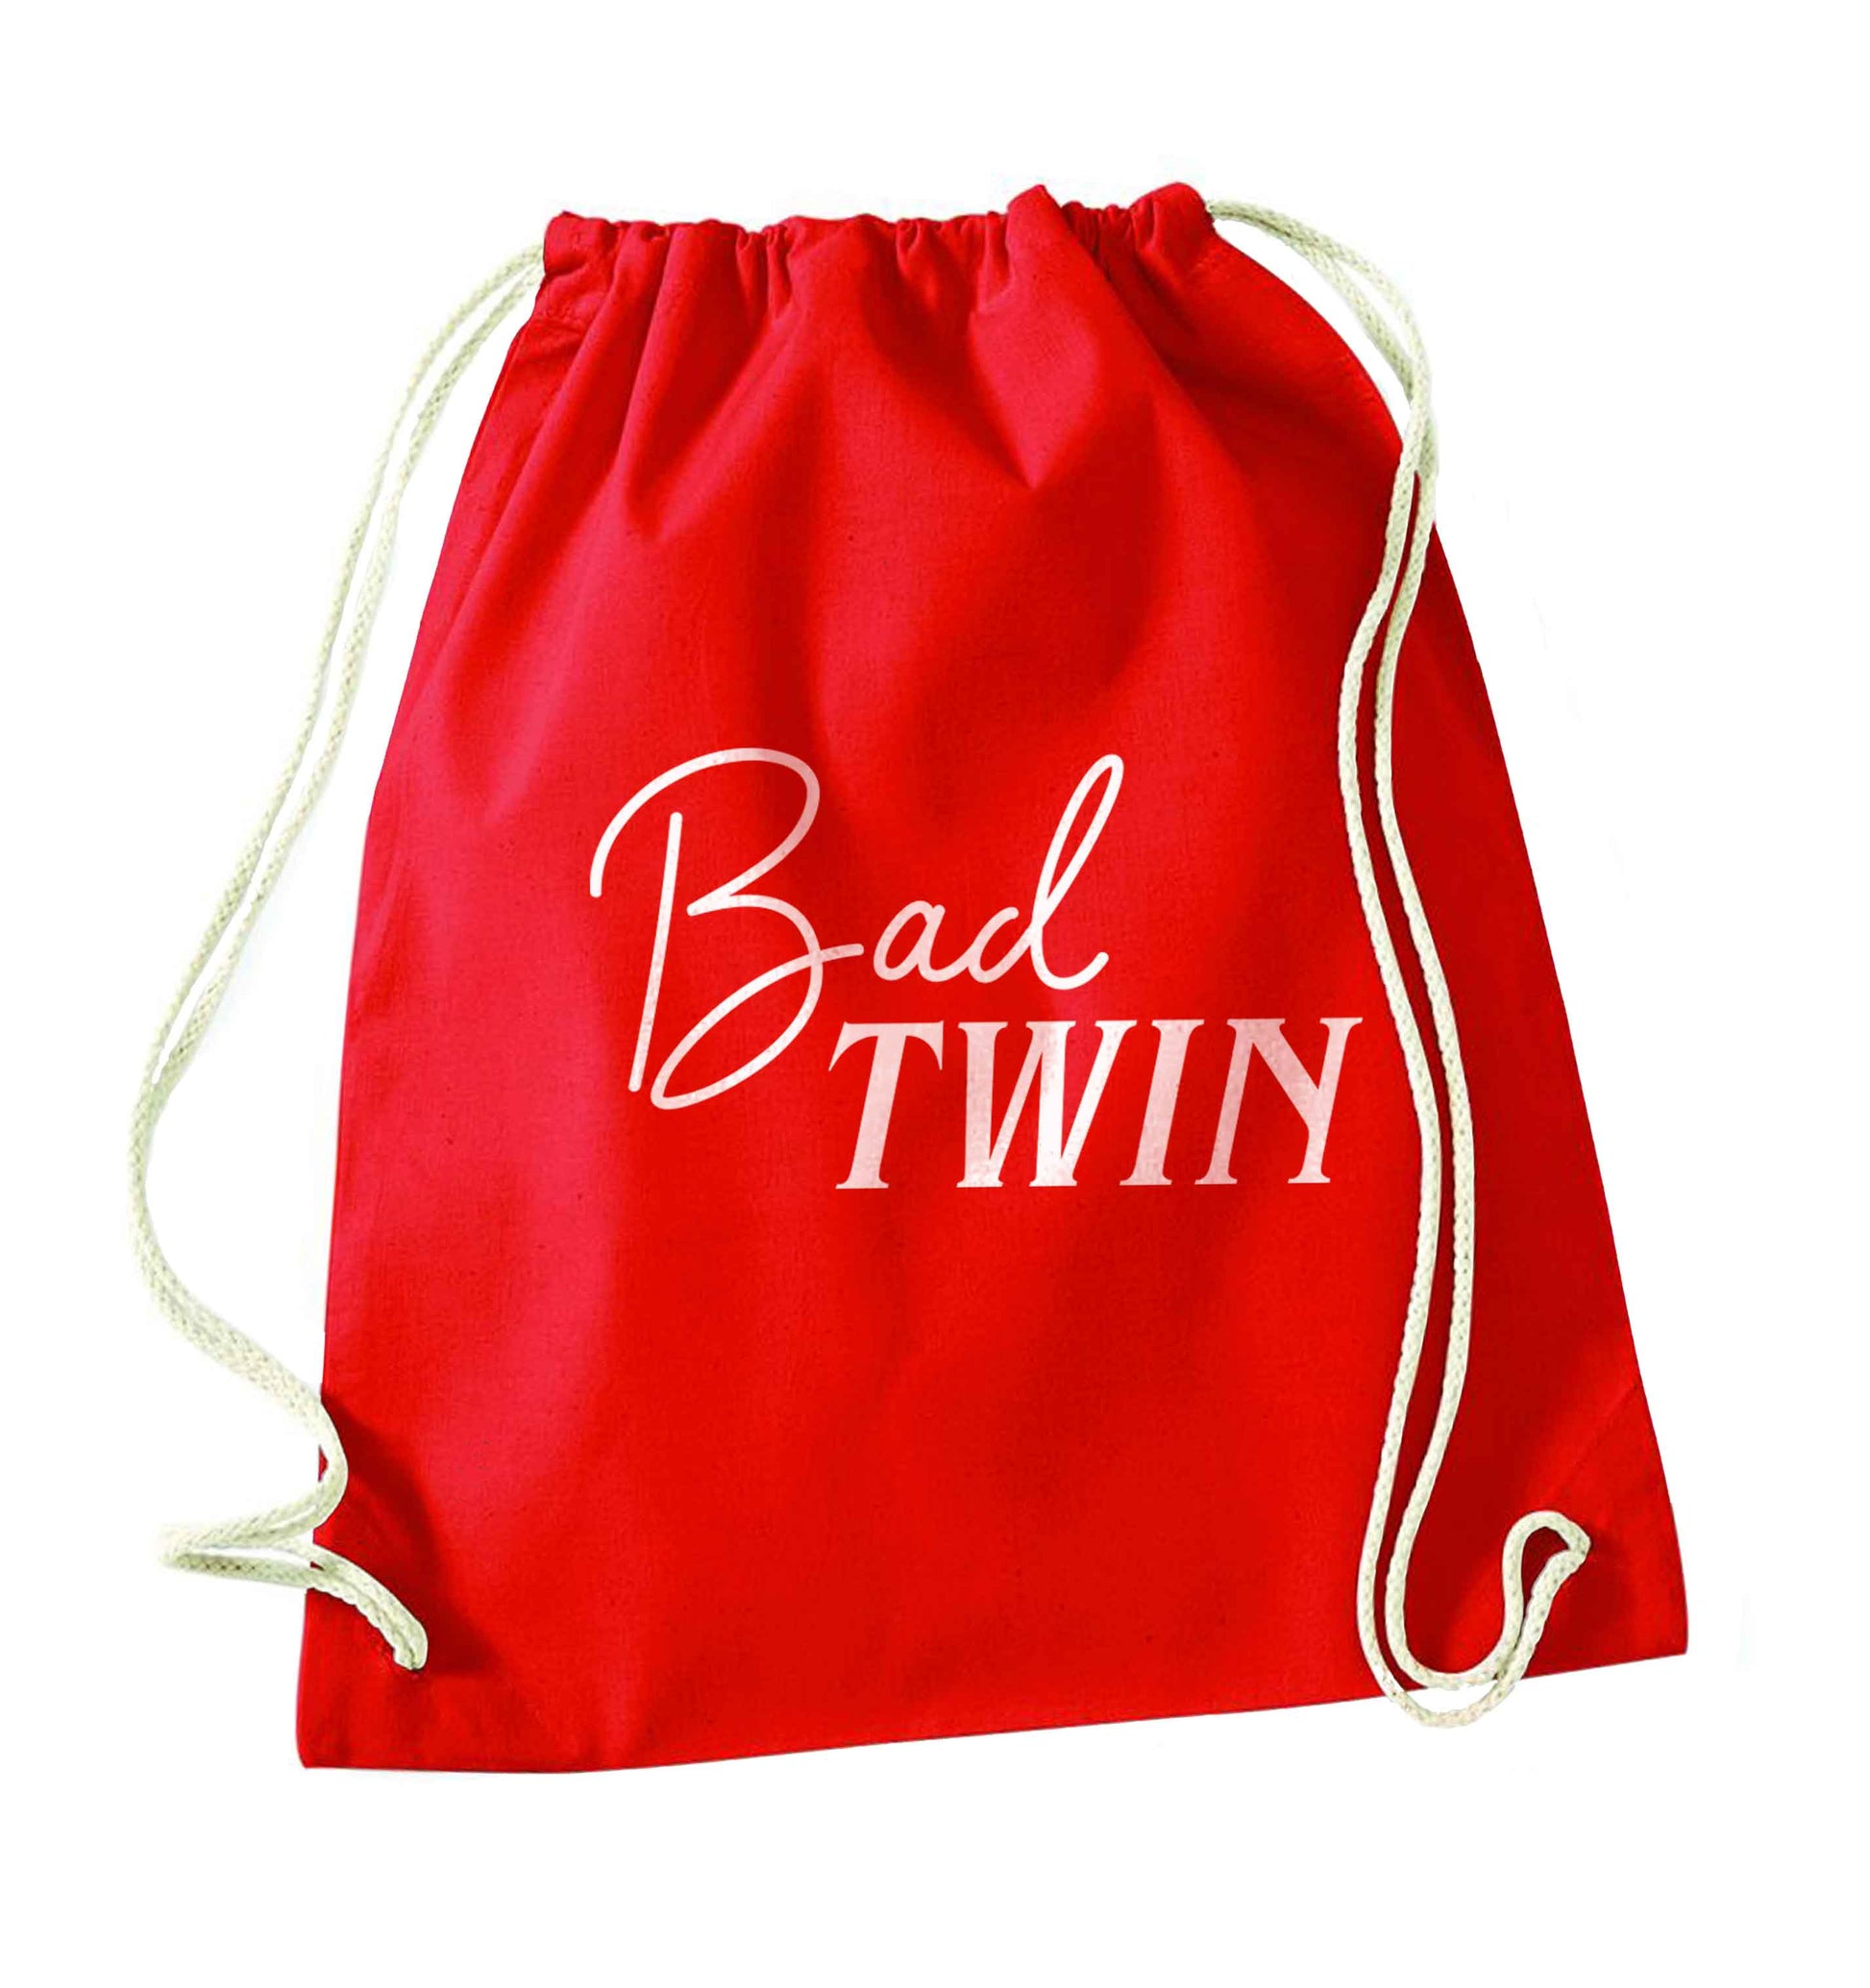 Bad twin red drawstring bag 